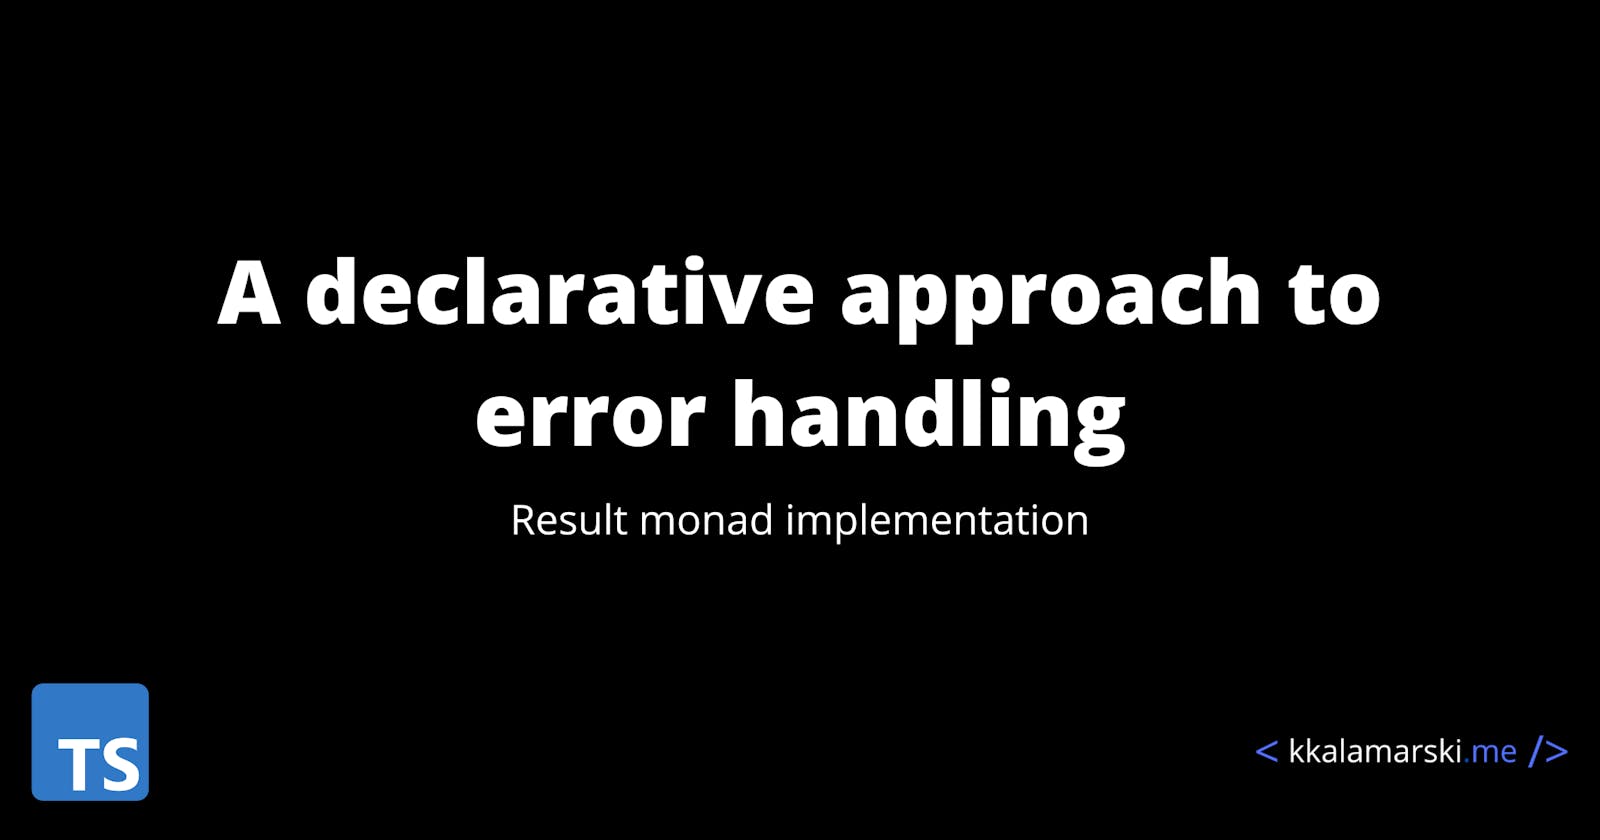 A declarative approach to error handling in Typescript